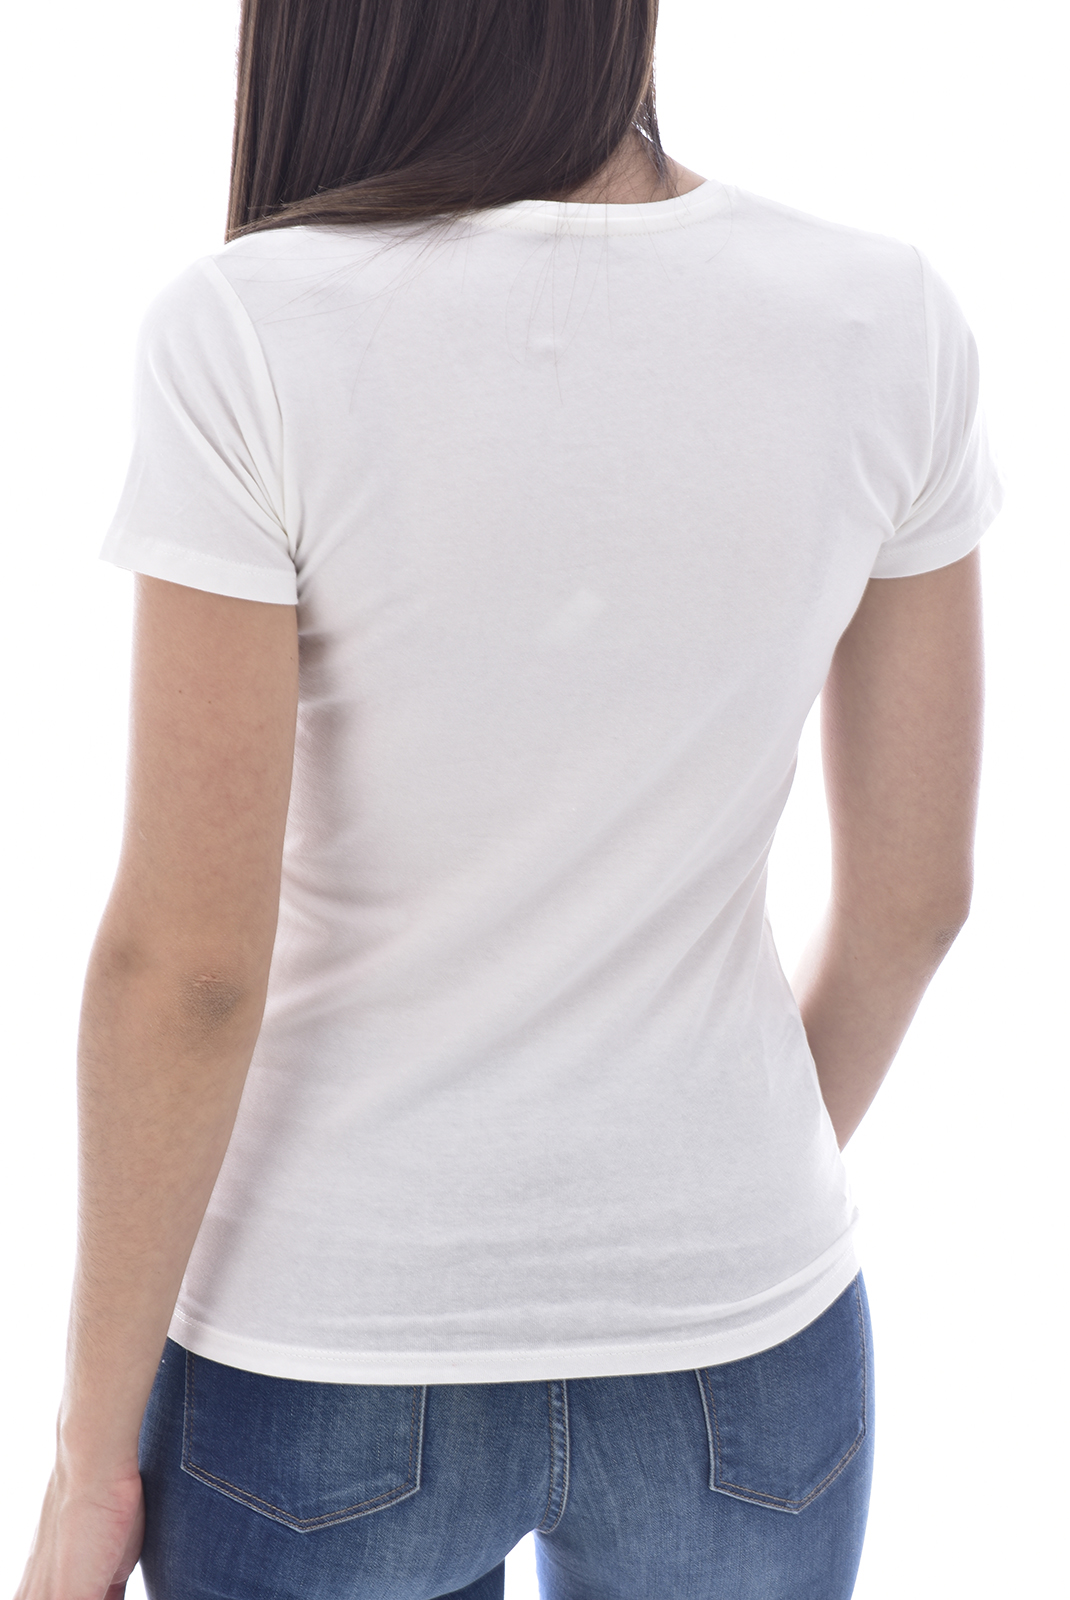 Tee-shirt à manches courtes blanc & col rond Kaporal - Penin